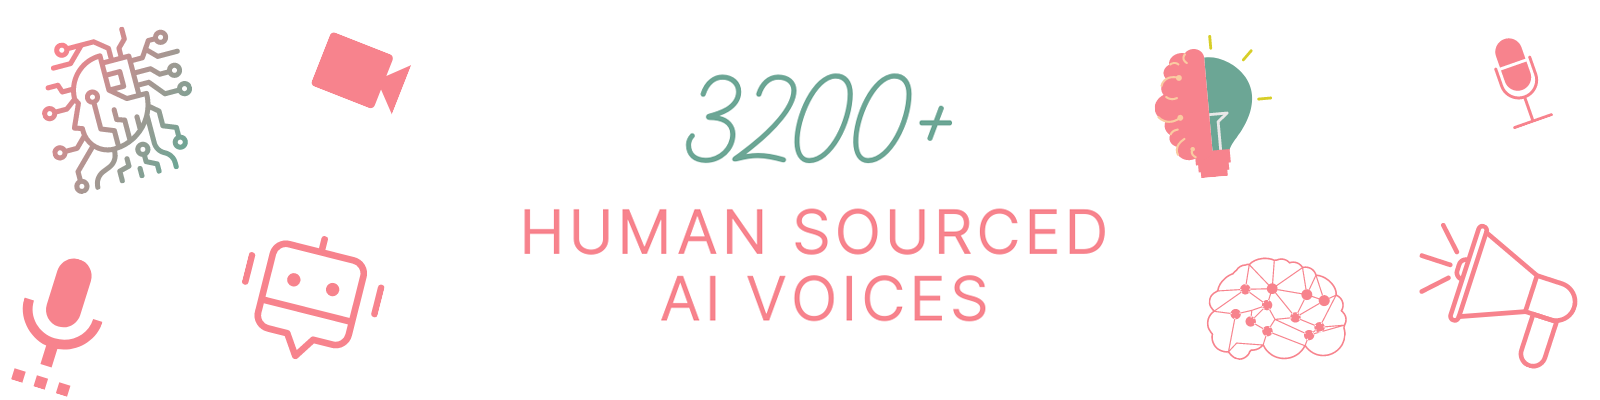 Tongues Translation Services - 3,200 AI Voices